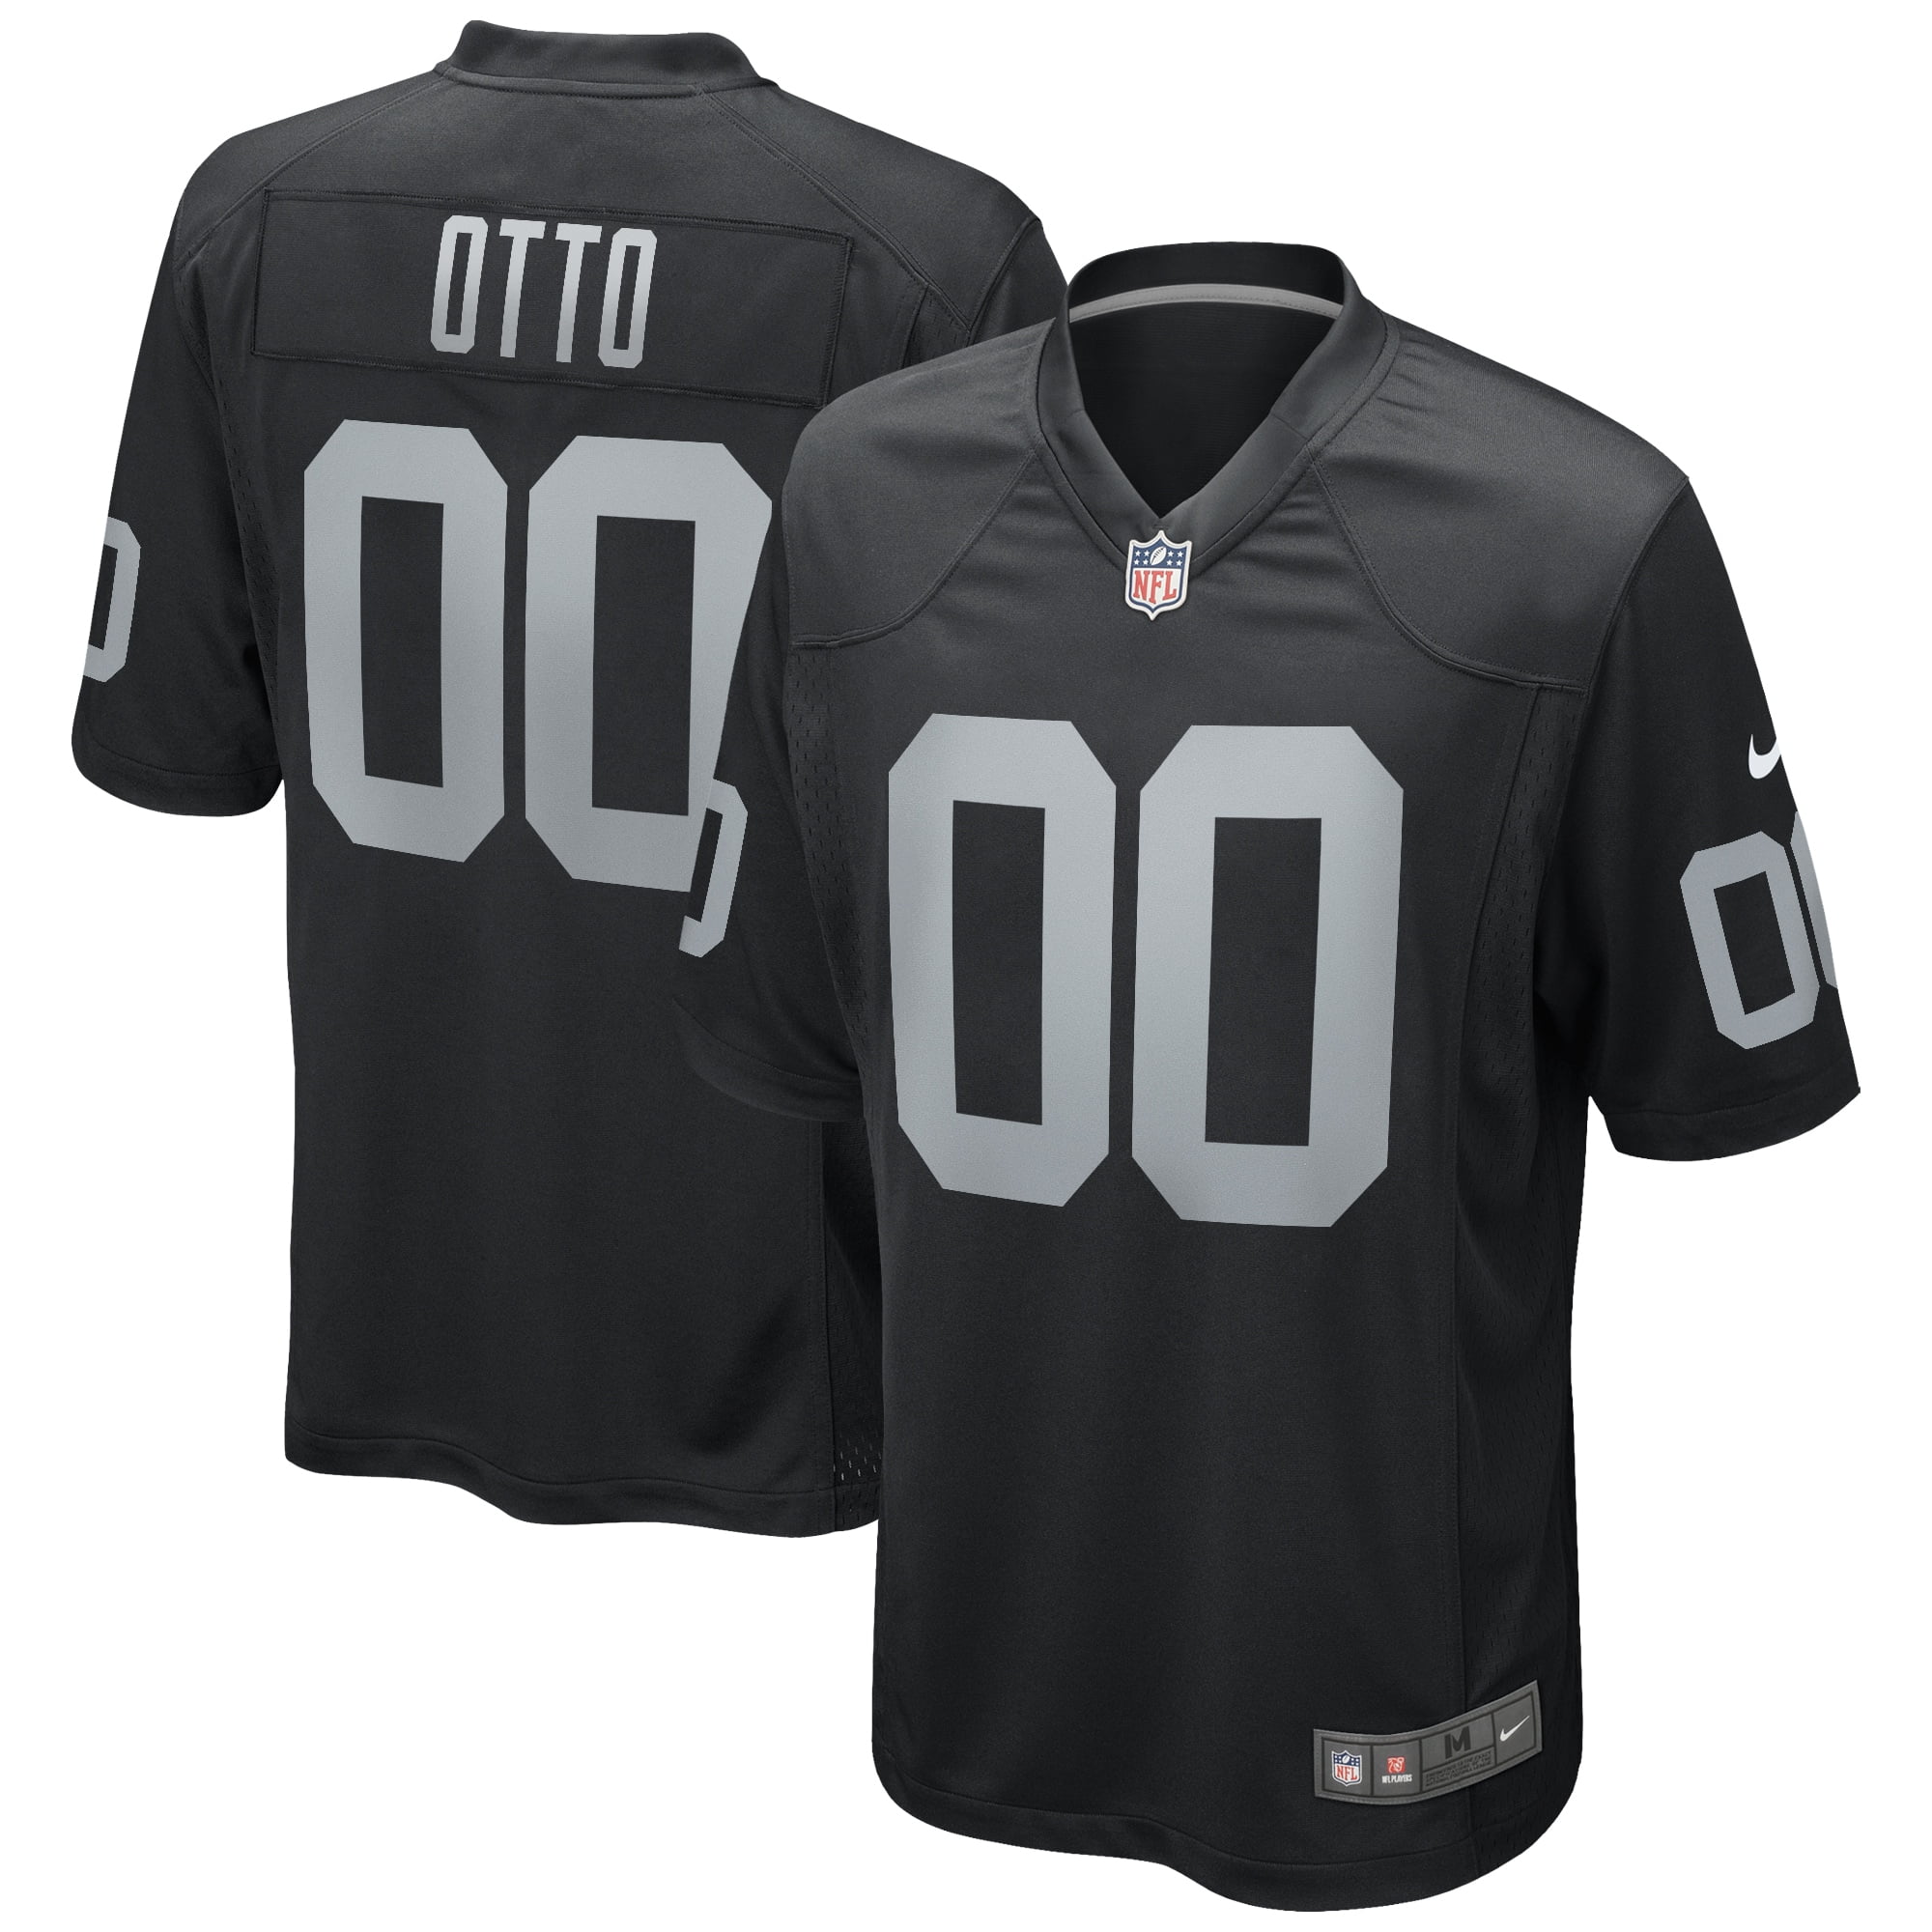 JIM OTTO Unsigned Custom Oakland Raiders Black Sewn New Football Jersey Sizes S-3XL